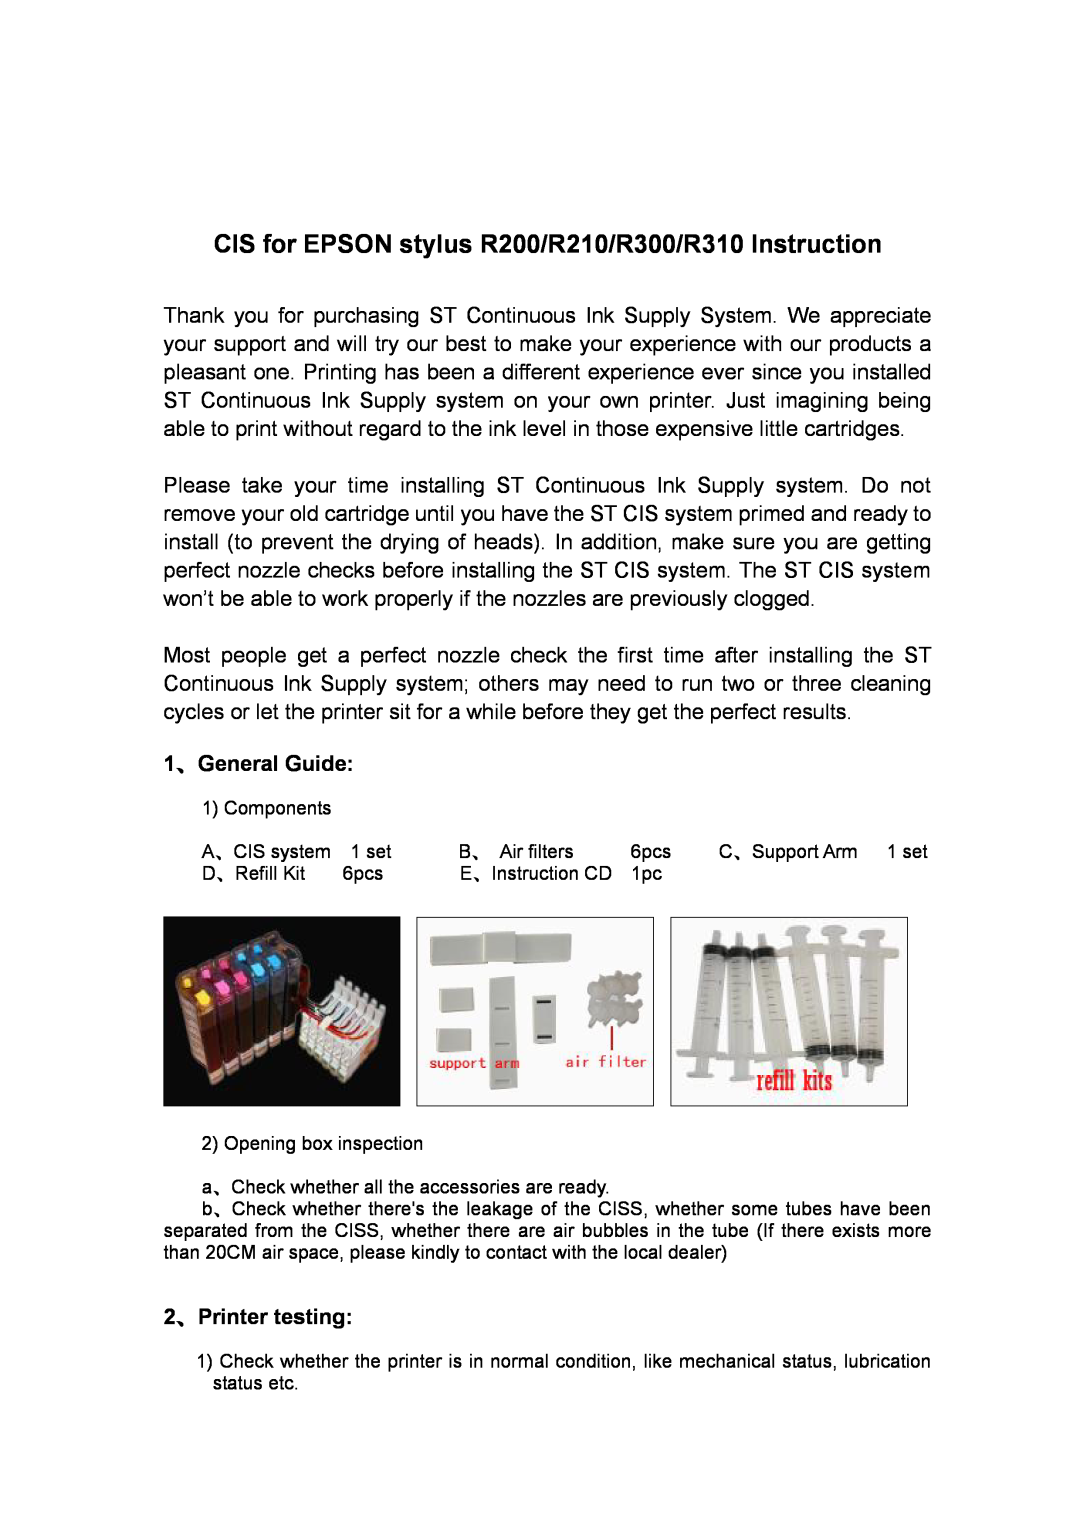 Epson R210 manual 1、General Guide, 2、Printer testing 